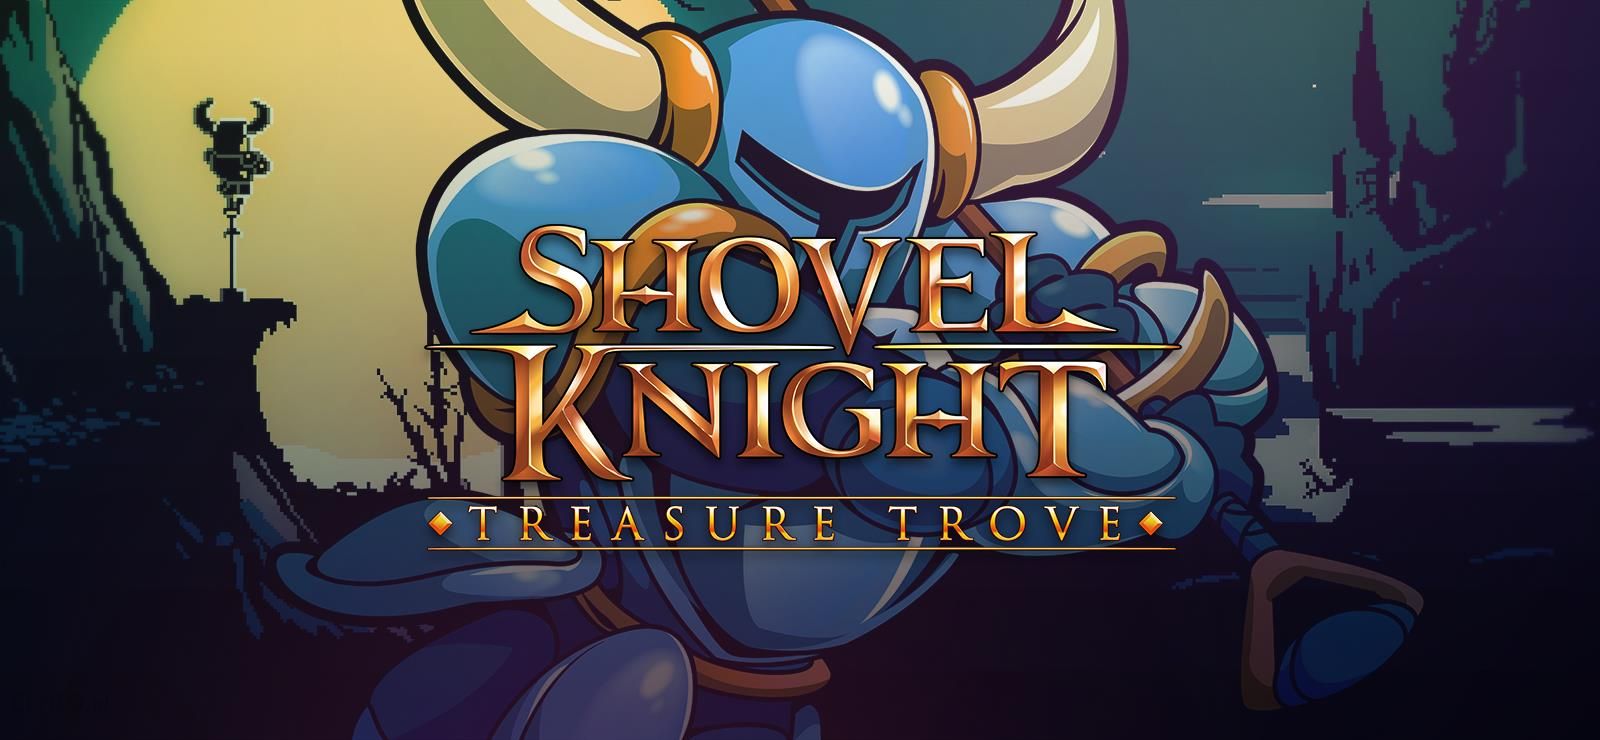 shovel knight treasure trove digital